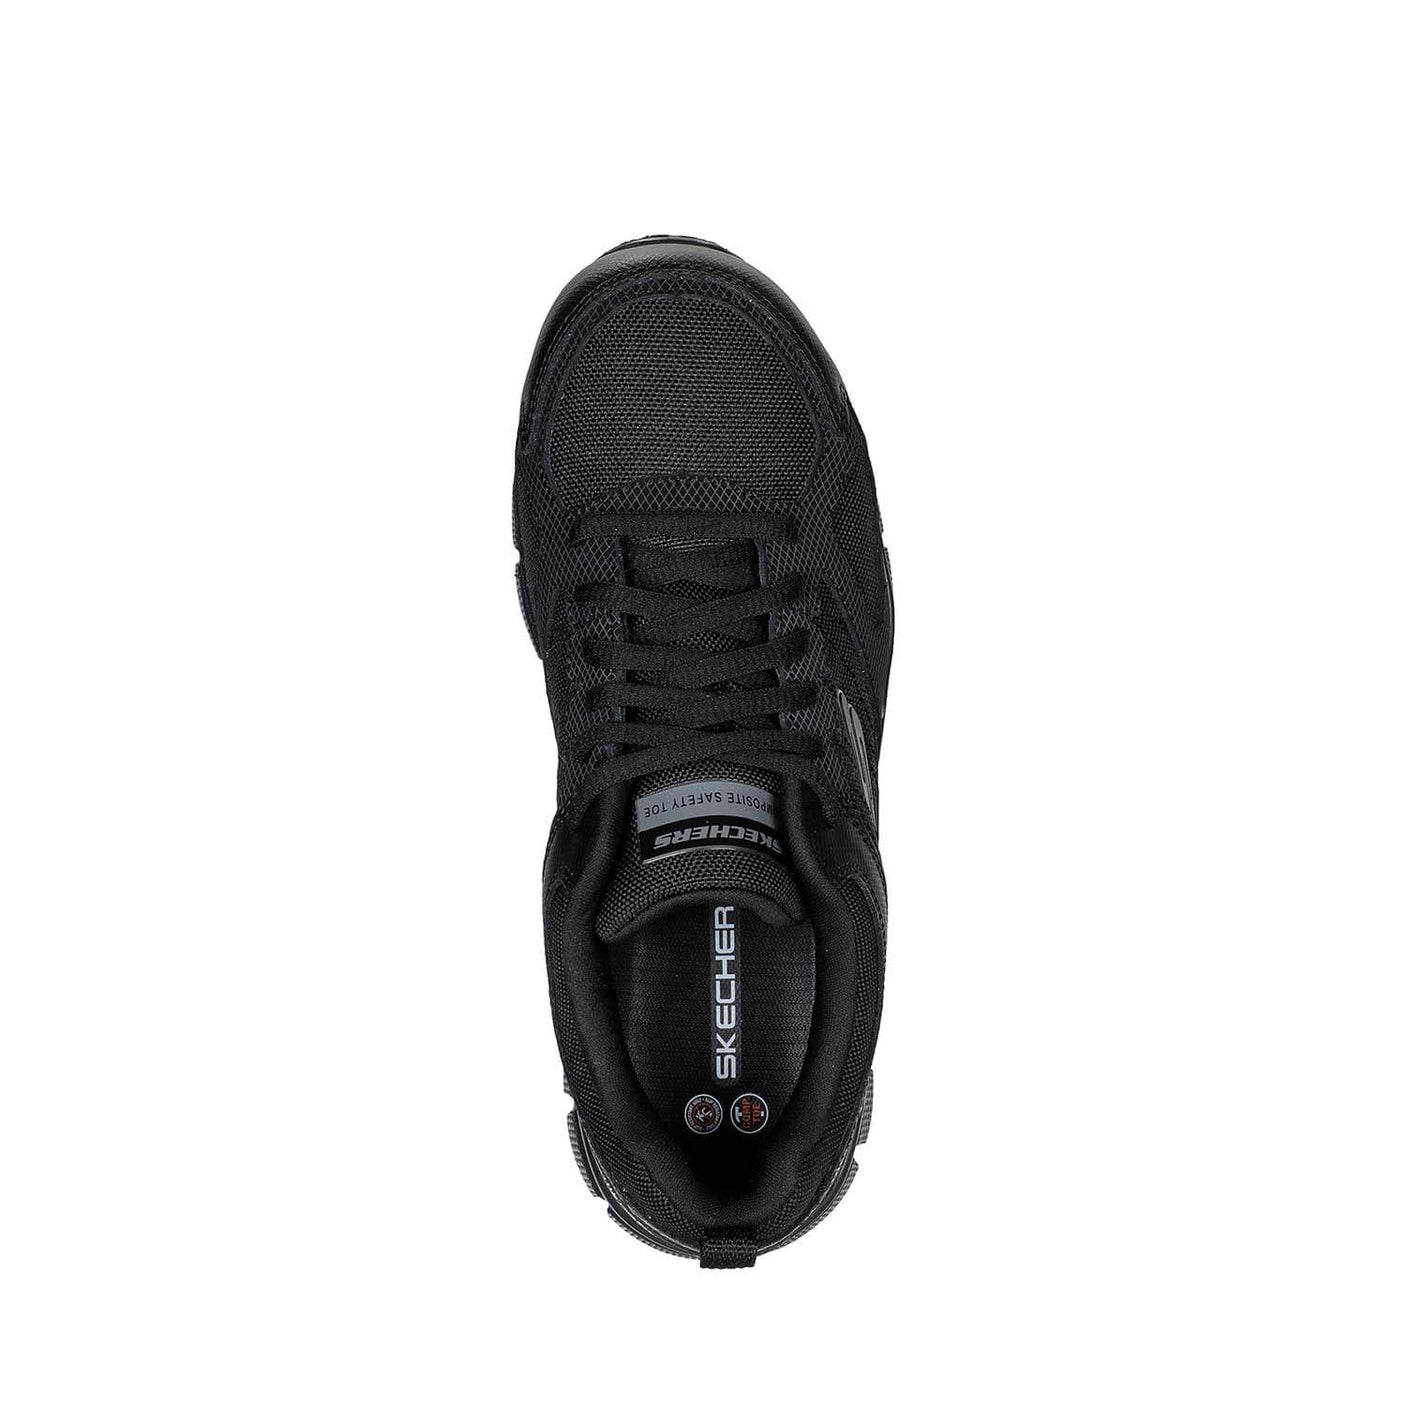 Skechers Telfin-Sanphet Slip-Resistant Shoe 71572-5